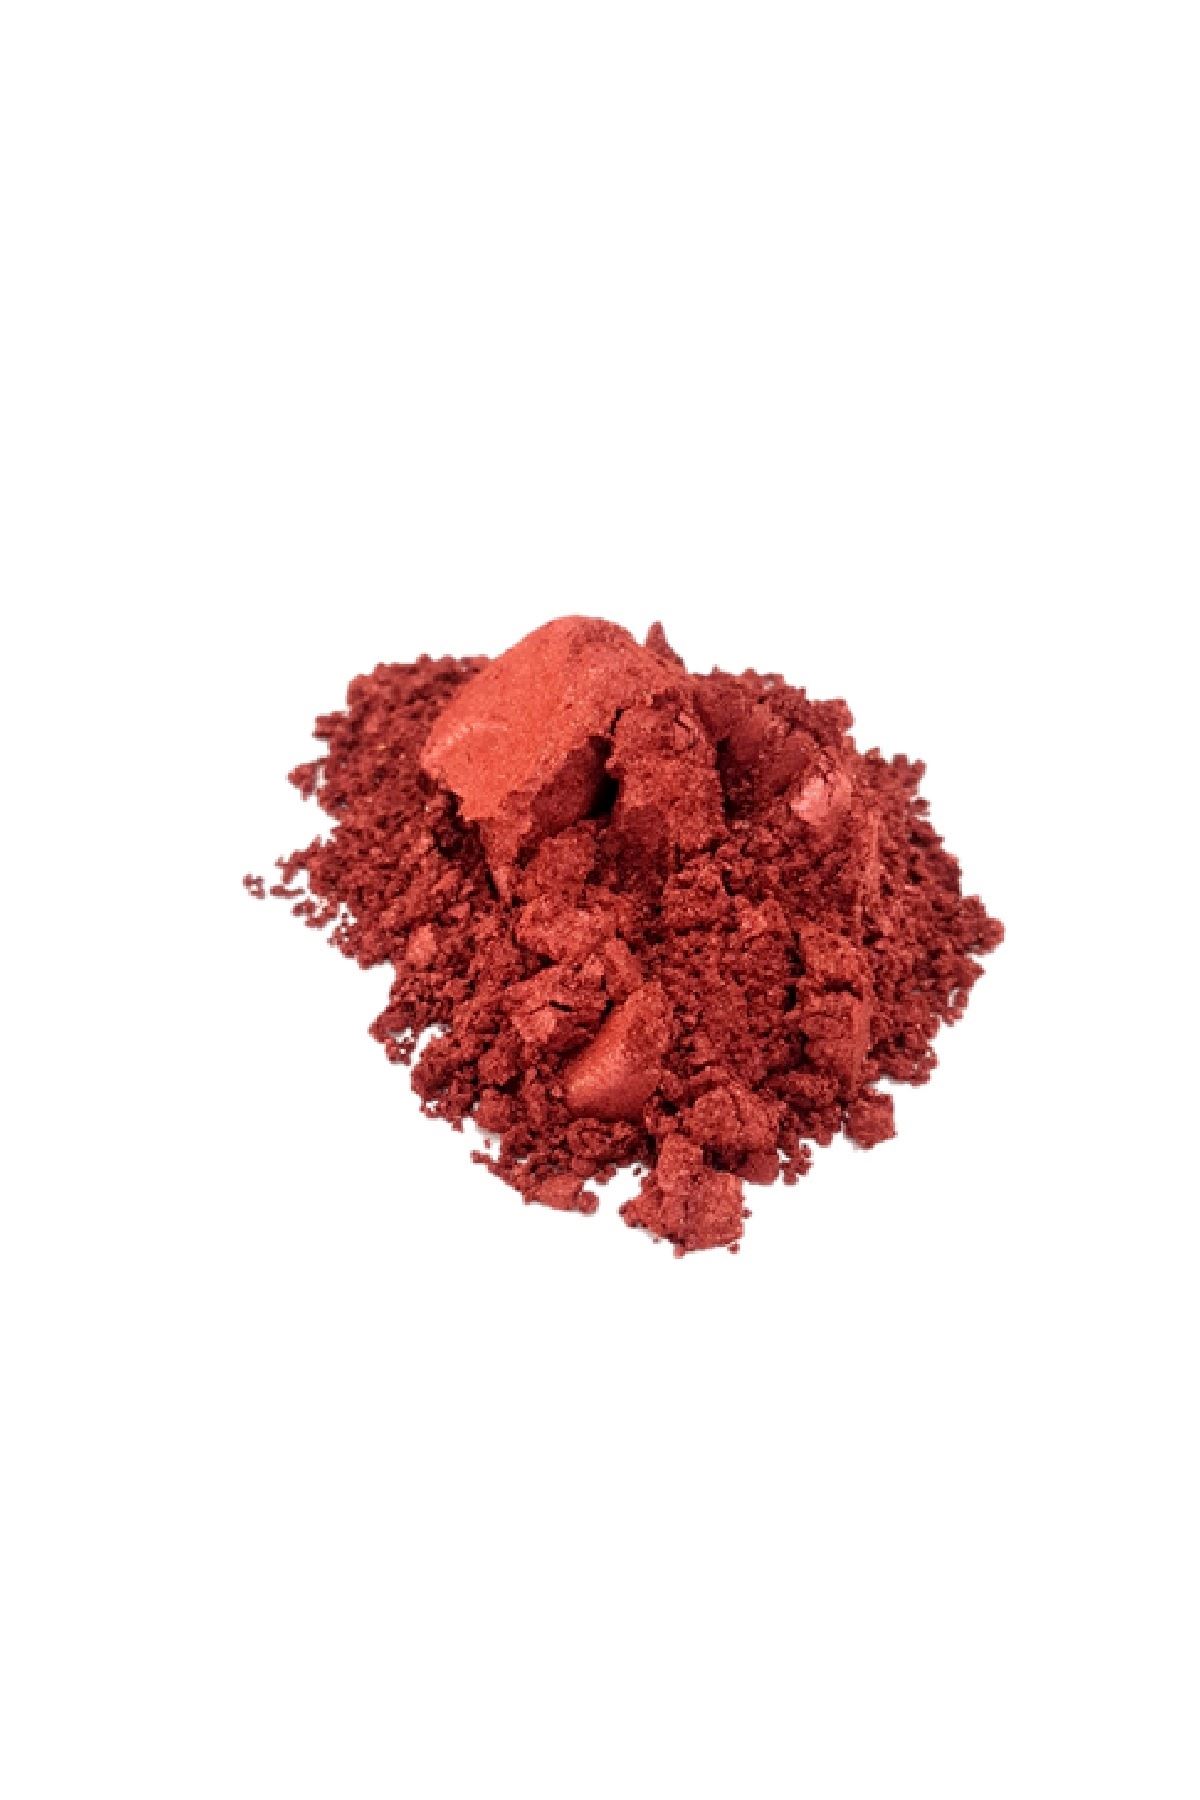 Brtr 10 Gr Devils Red Epoksi Metalik Toz Pigment(koyu Kırmızı)